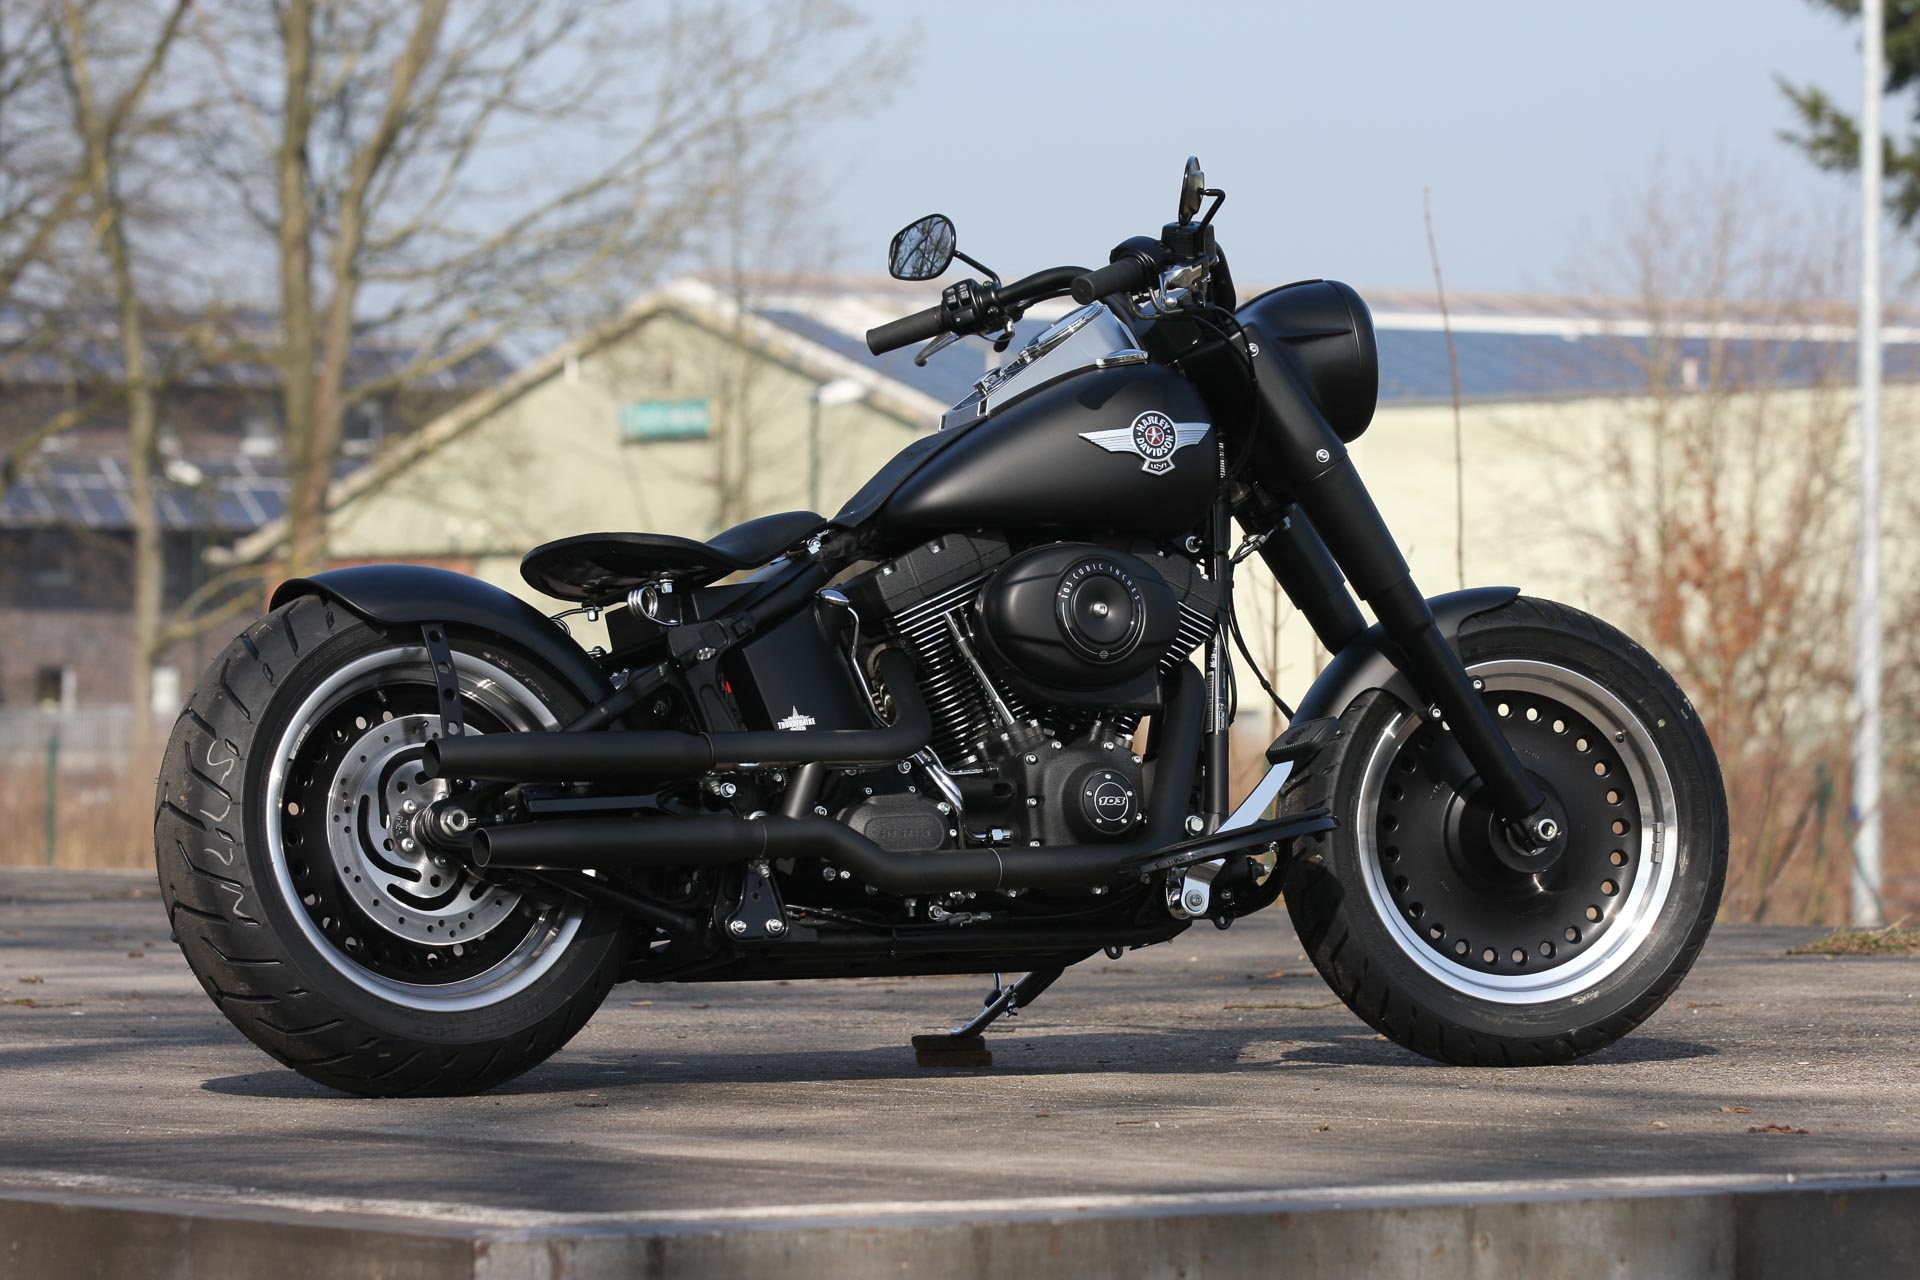 Harley Davidson Bad Boy Hotsell, 55% OFF | espirituviajero.com